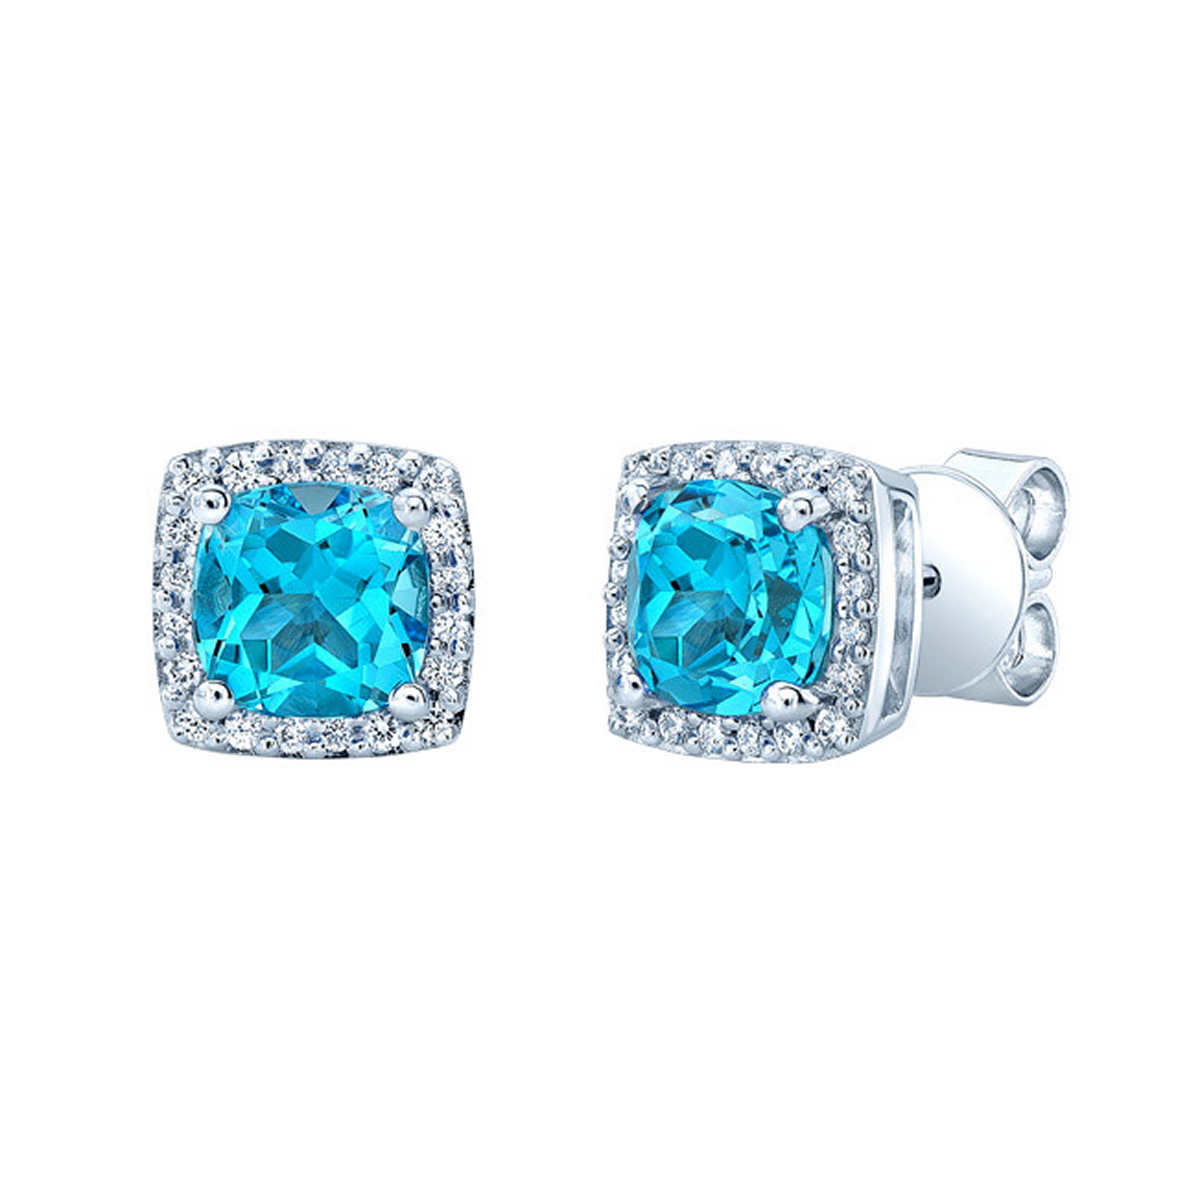 Swiss Blue Topaz and Diamond 14kt White Gold Earrings | Costco